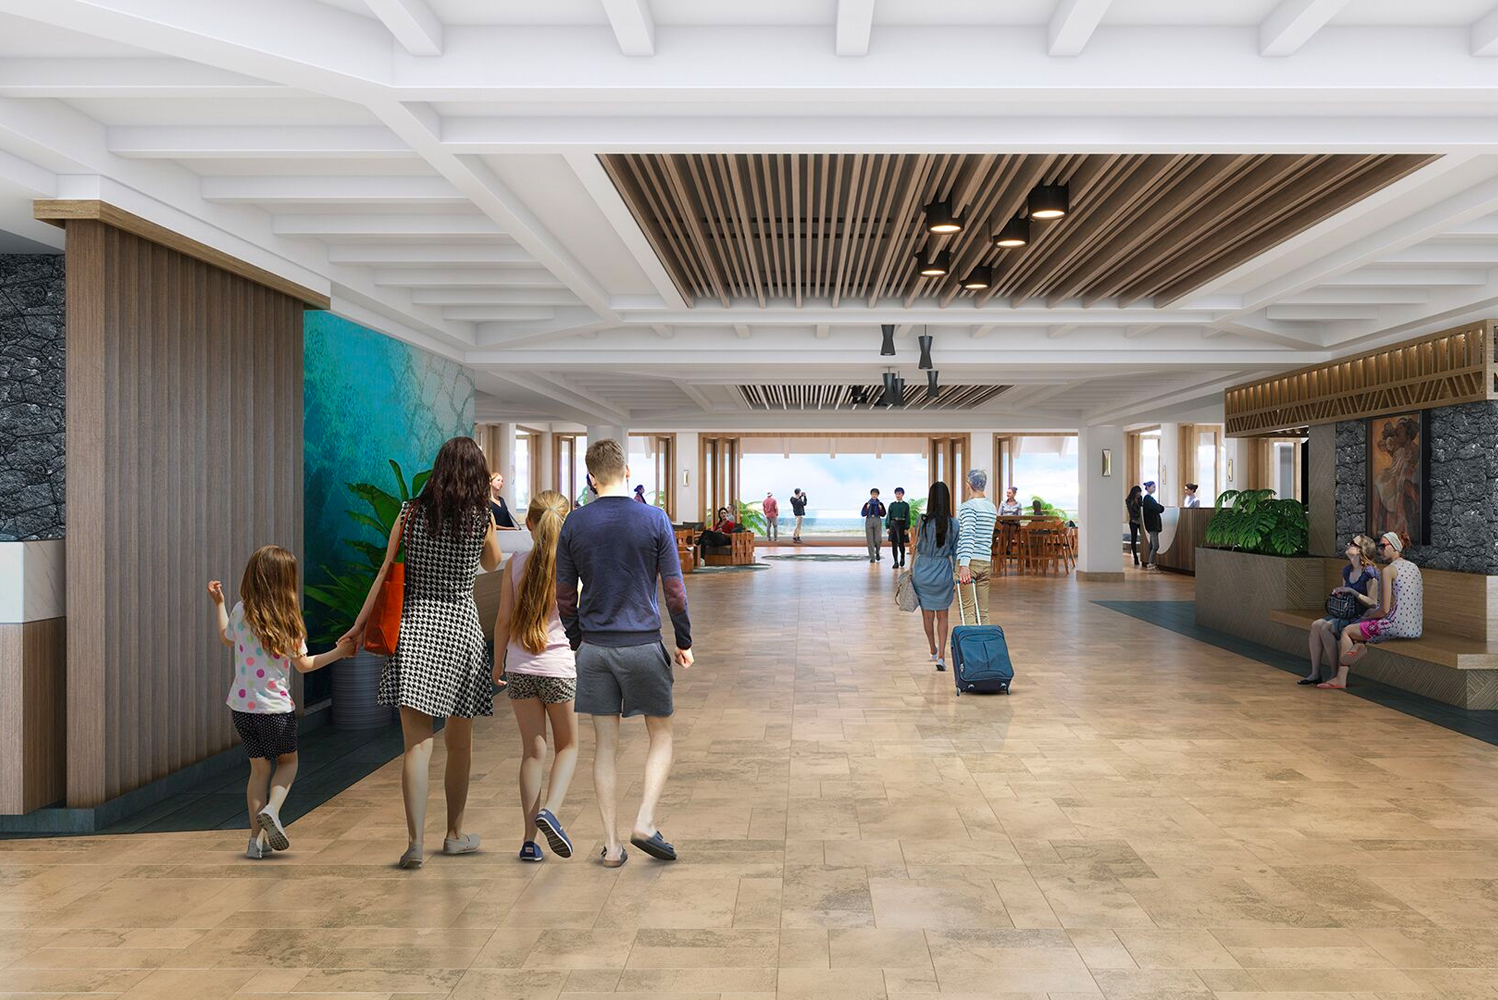 Sheraton Maui Resort  Spa transforms its lobby